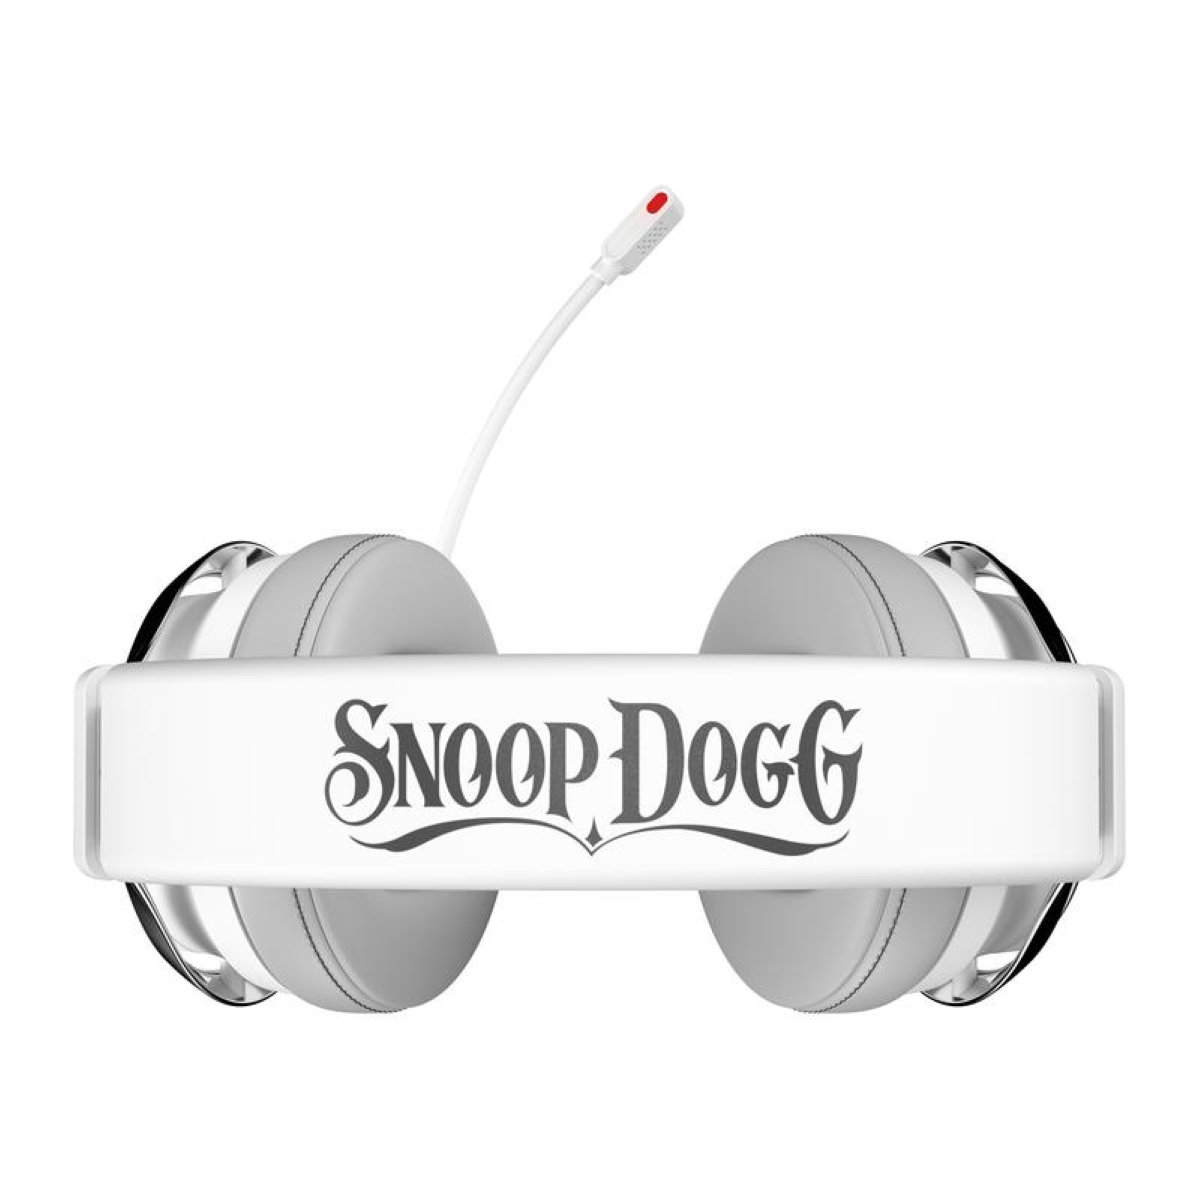 LS50X Snoop Dogg Headset - "Snoop Dogg" Imprint/Stamp